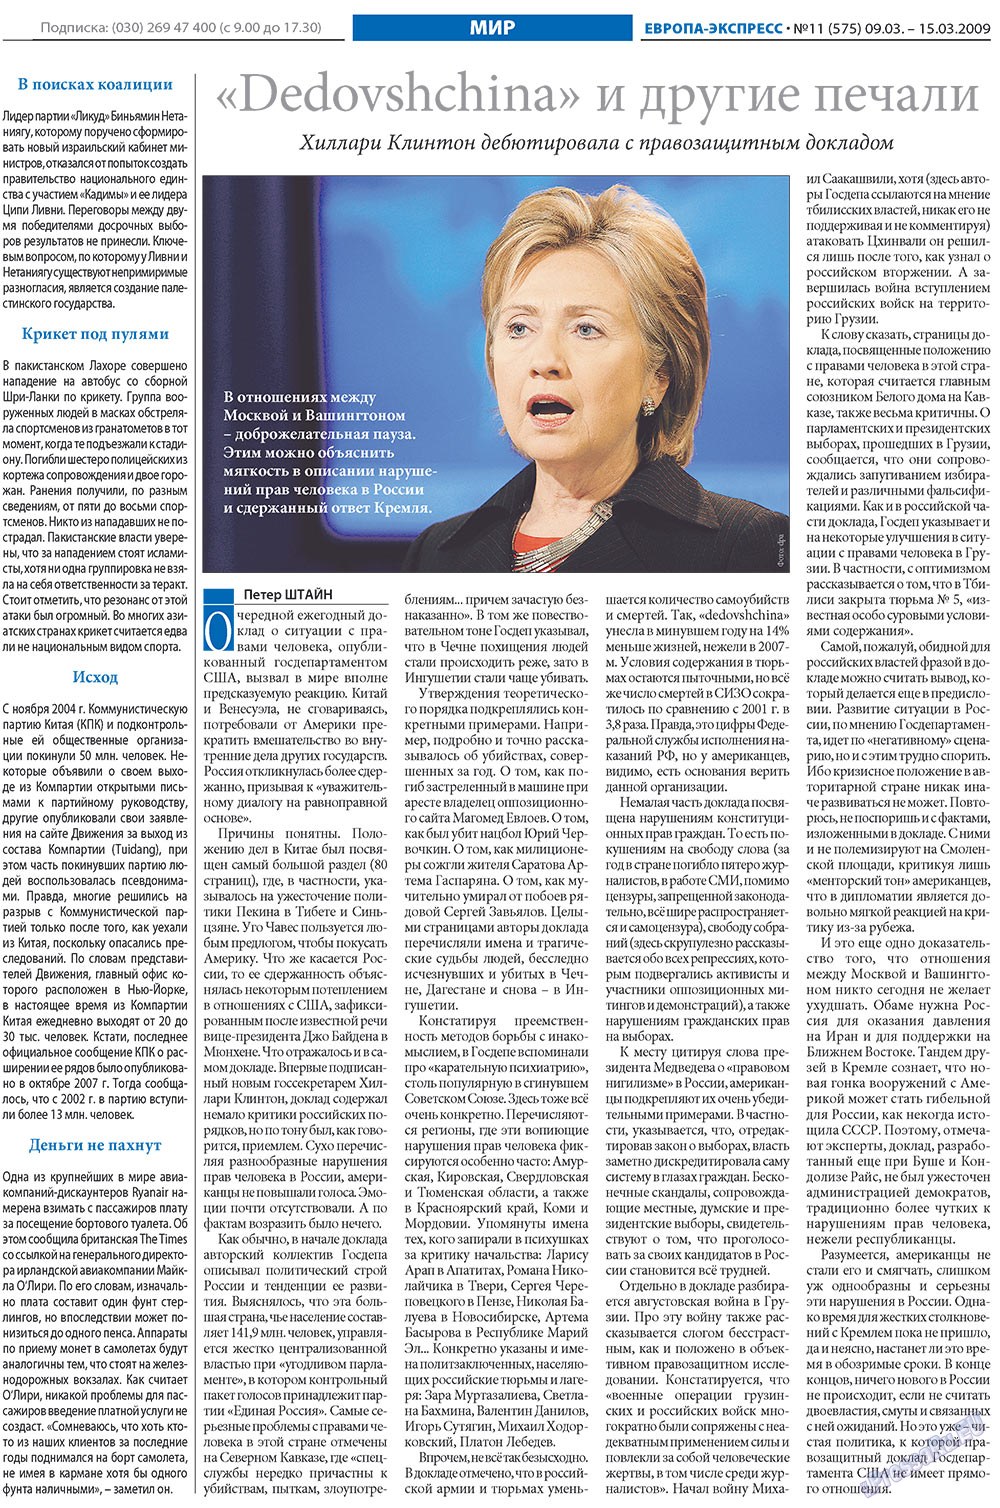 Европа экспресс, газета. 2009 №11 стр.9